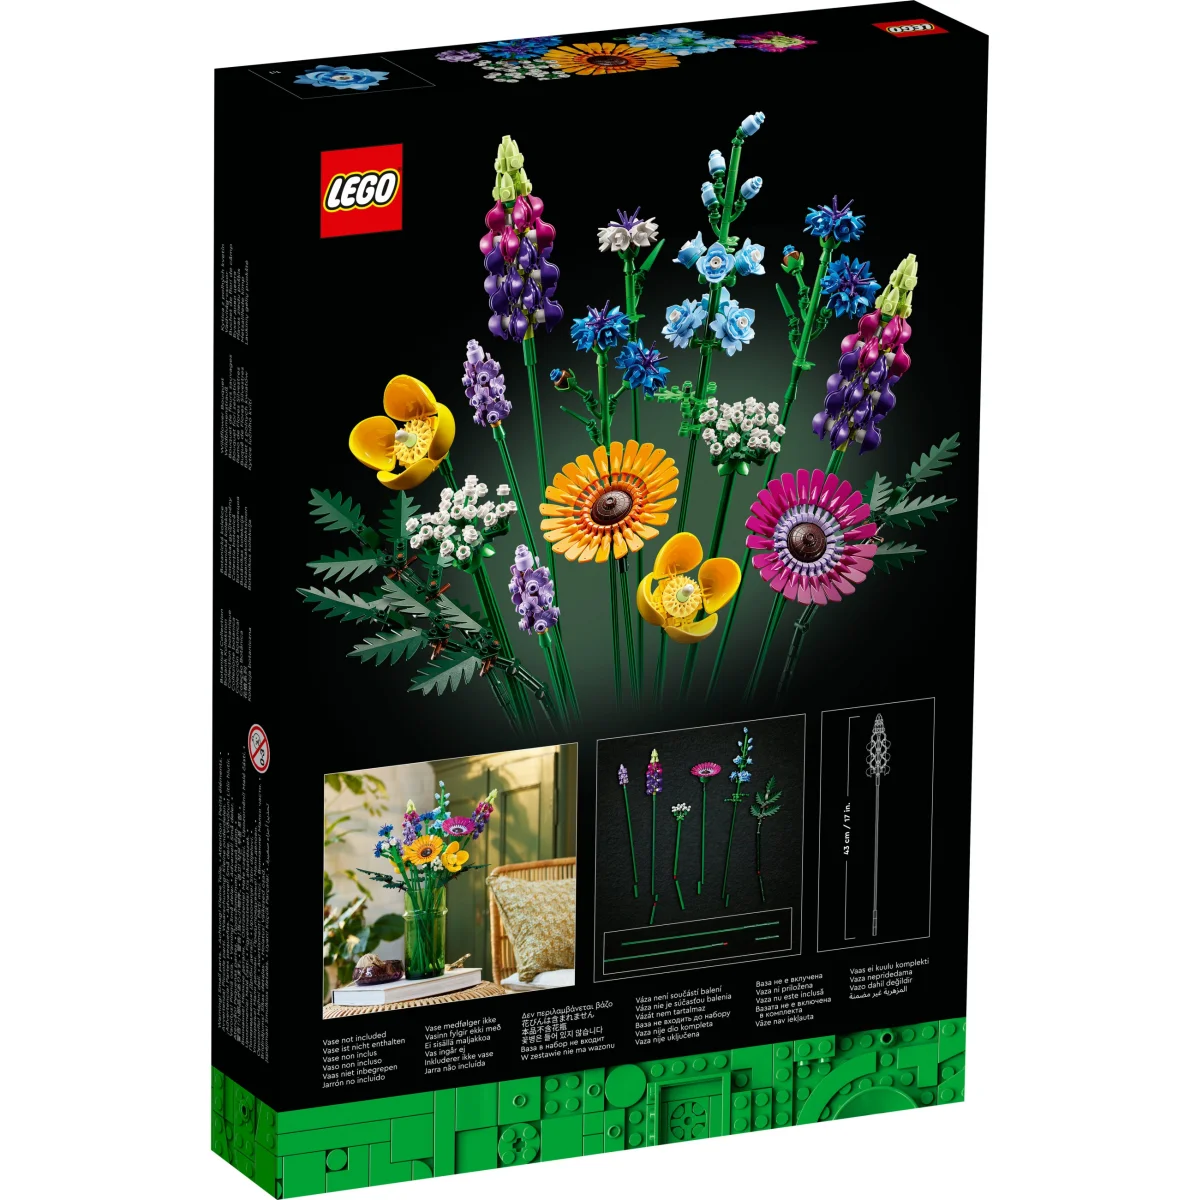 LEGO® ICONS Wildblumenstrauß 10313